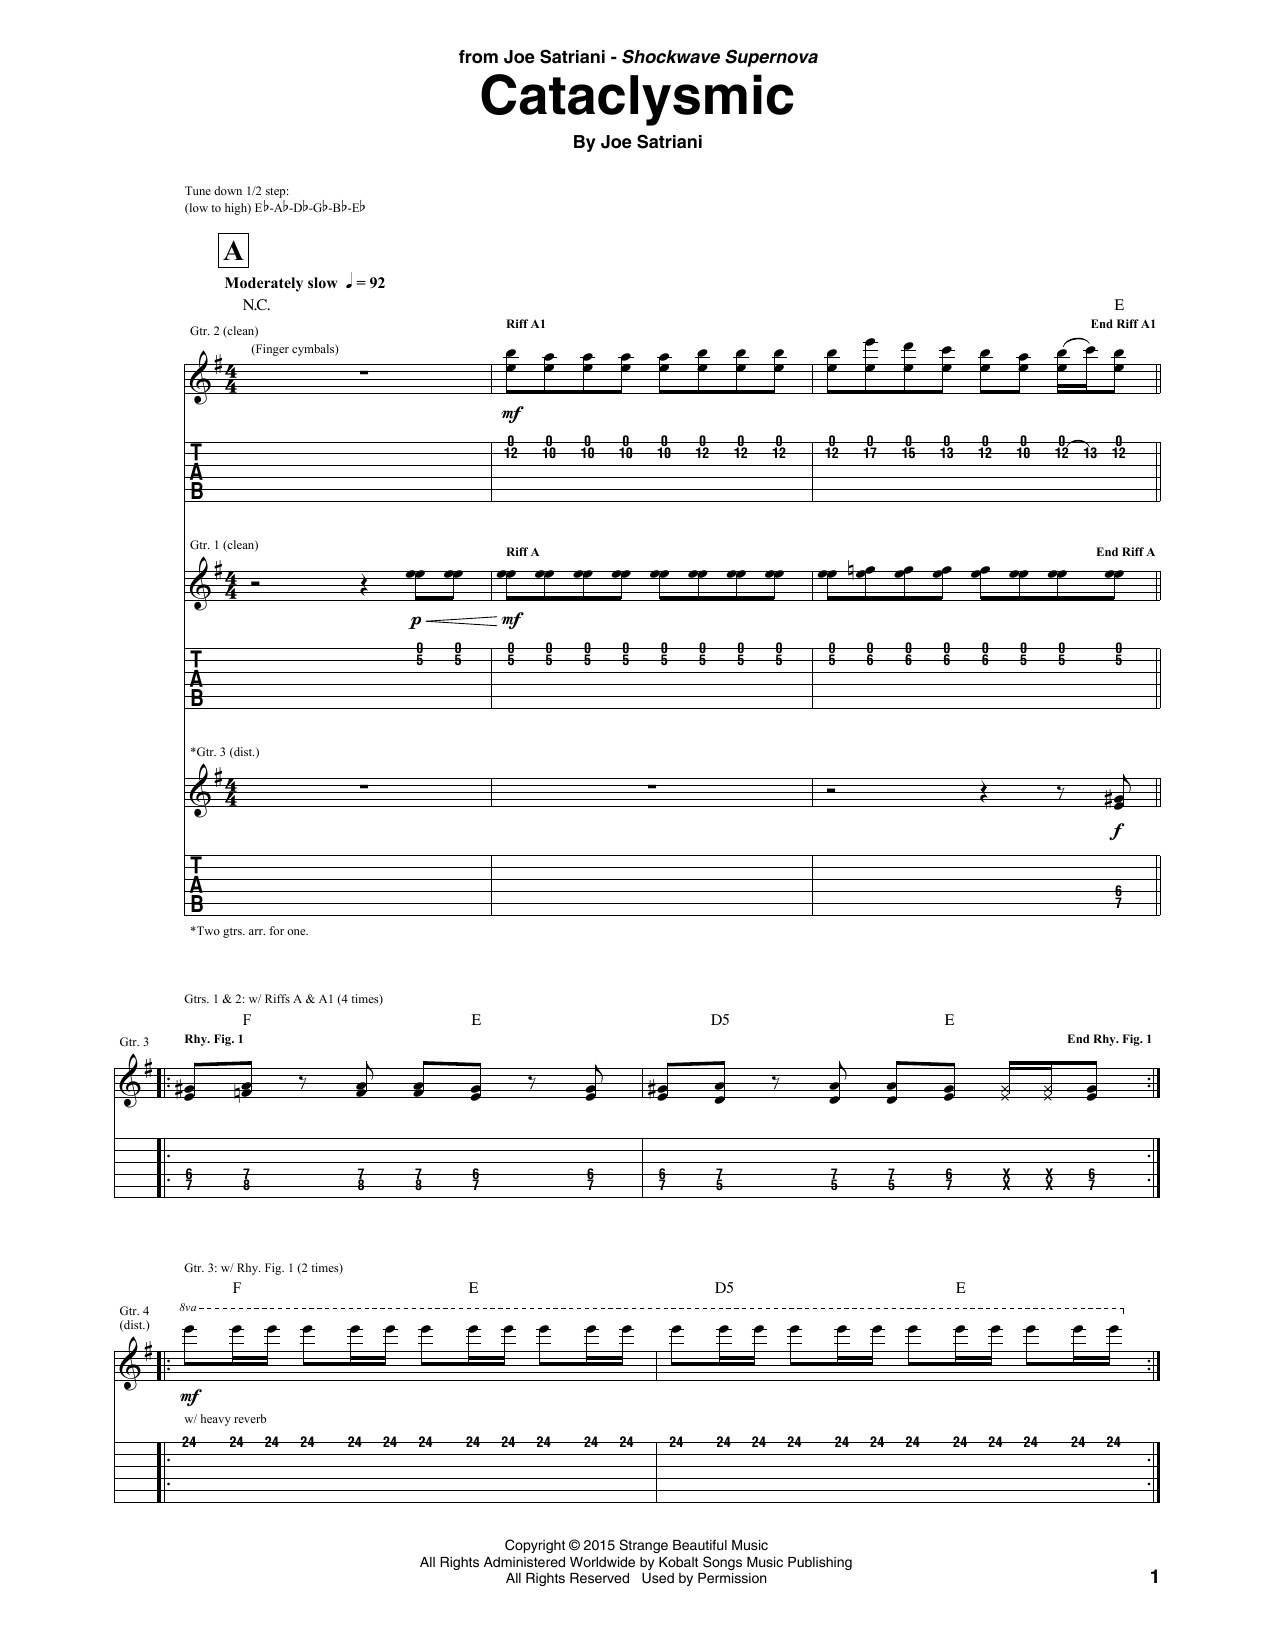 Joe Satriani Cataclysmic Sheet Music Notes & Chords for Guitar Tab - Download or Print PDF